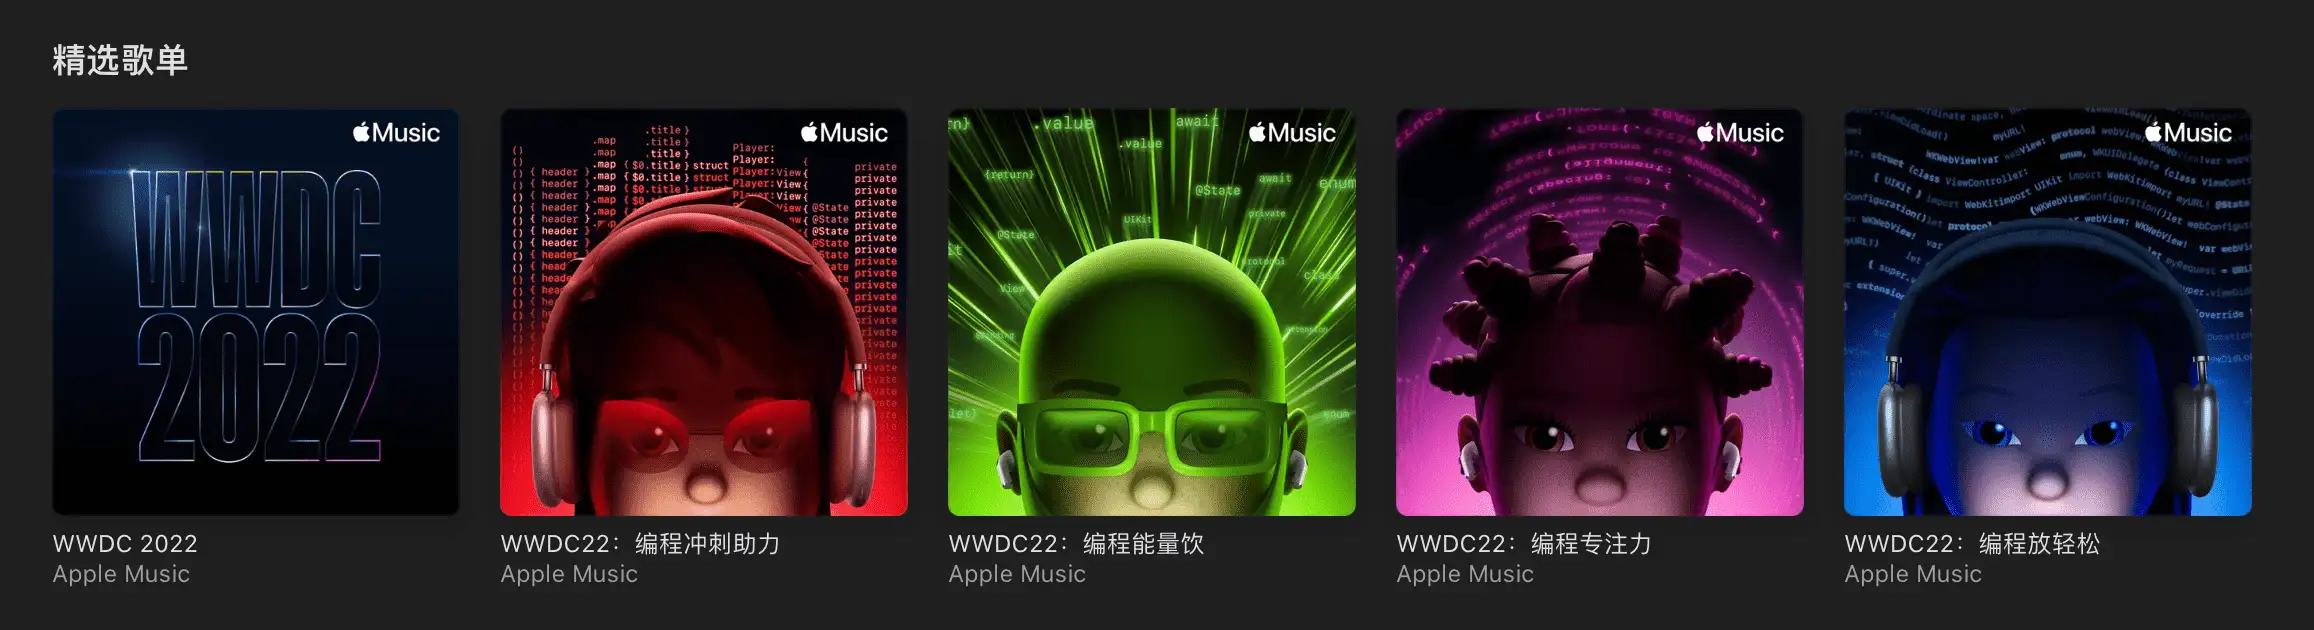 Apple WWDC 22 歌单